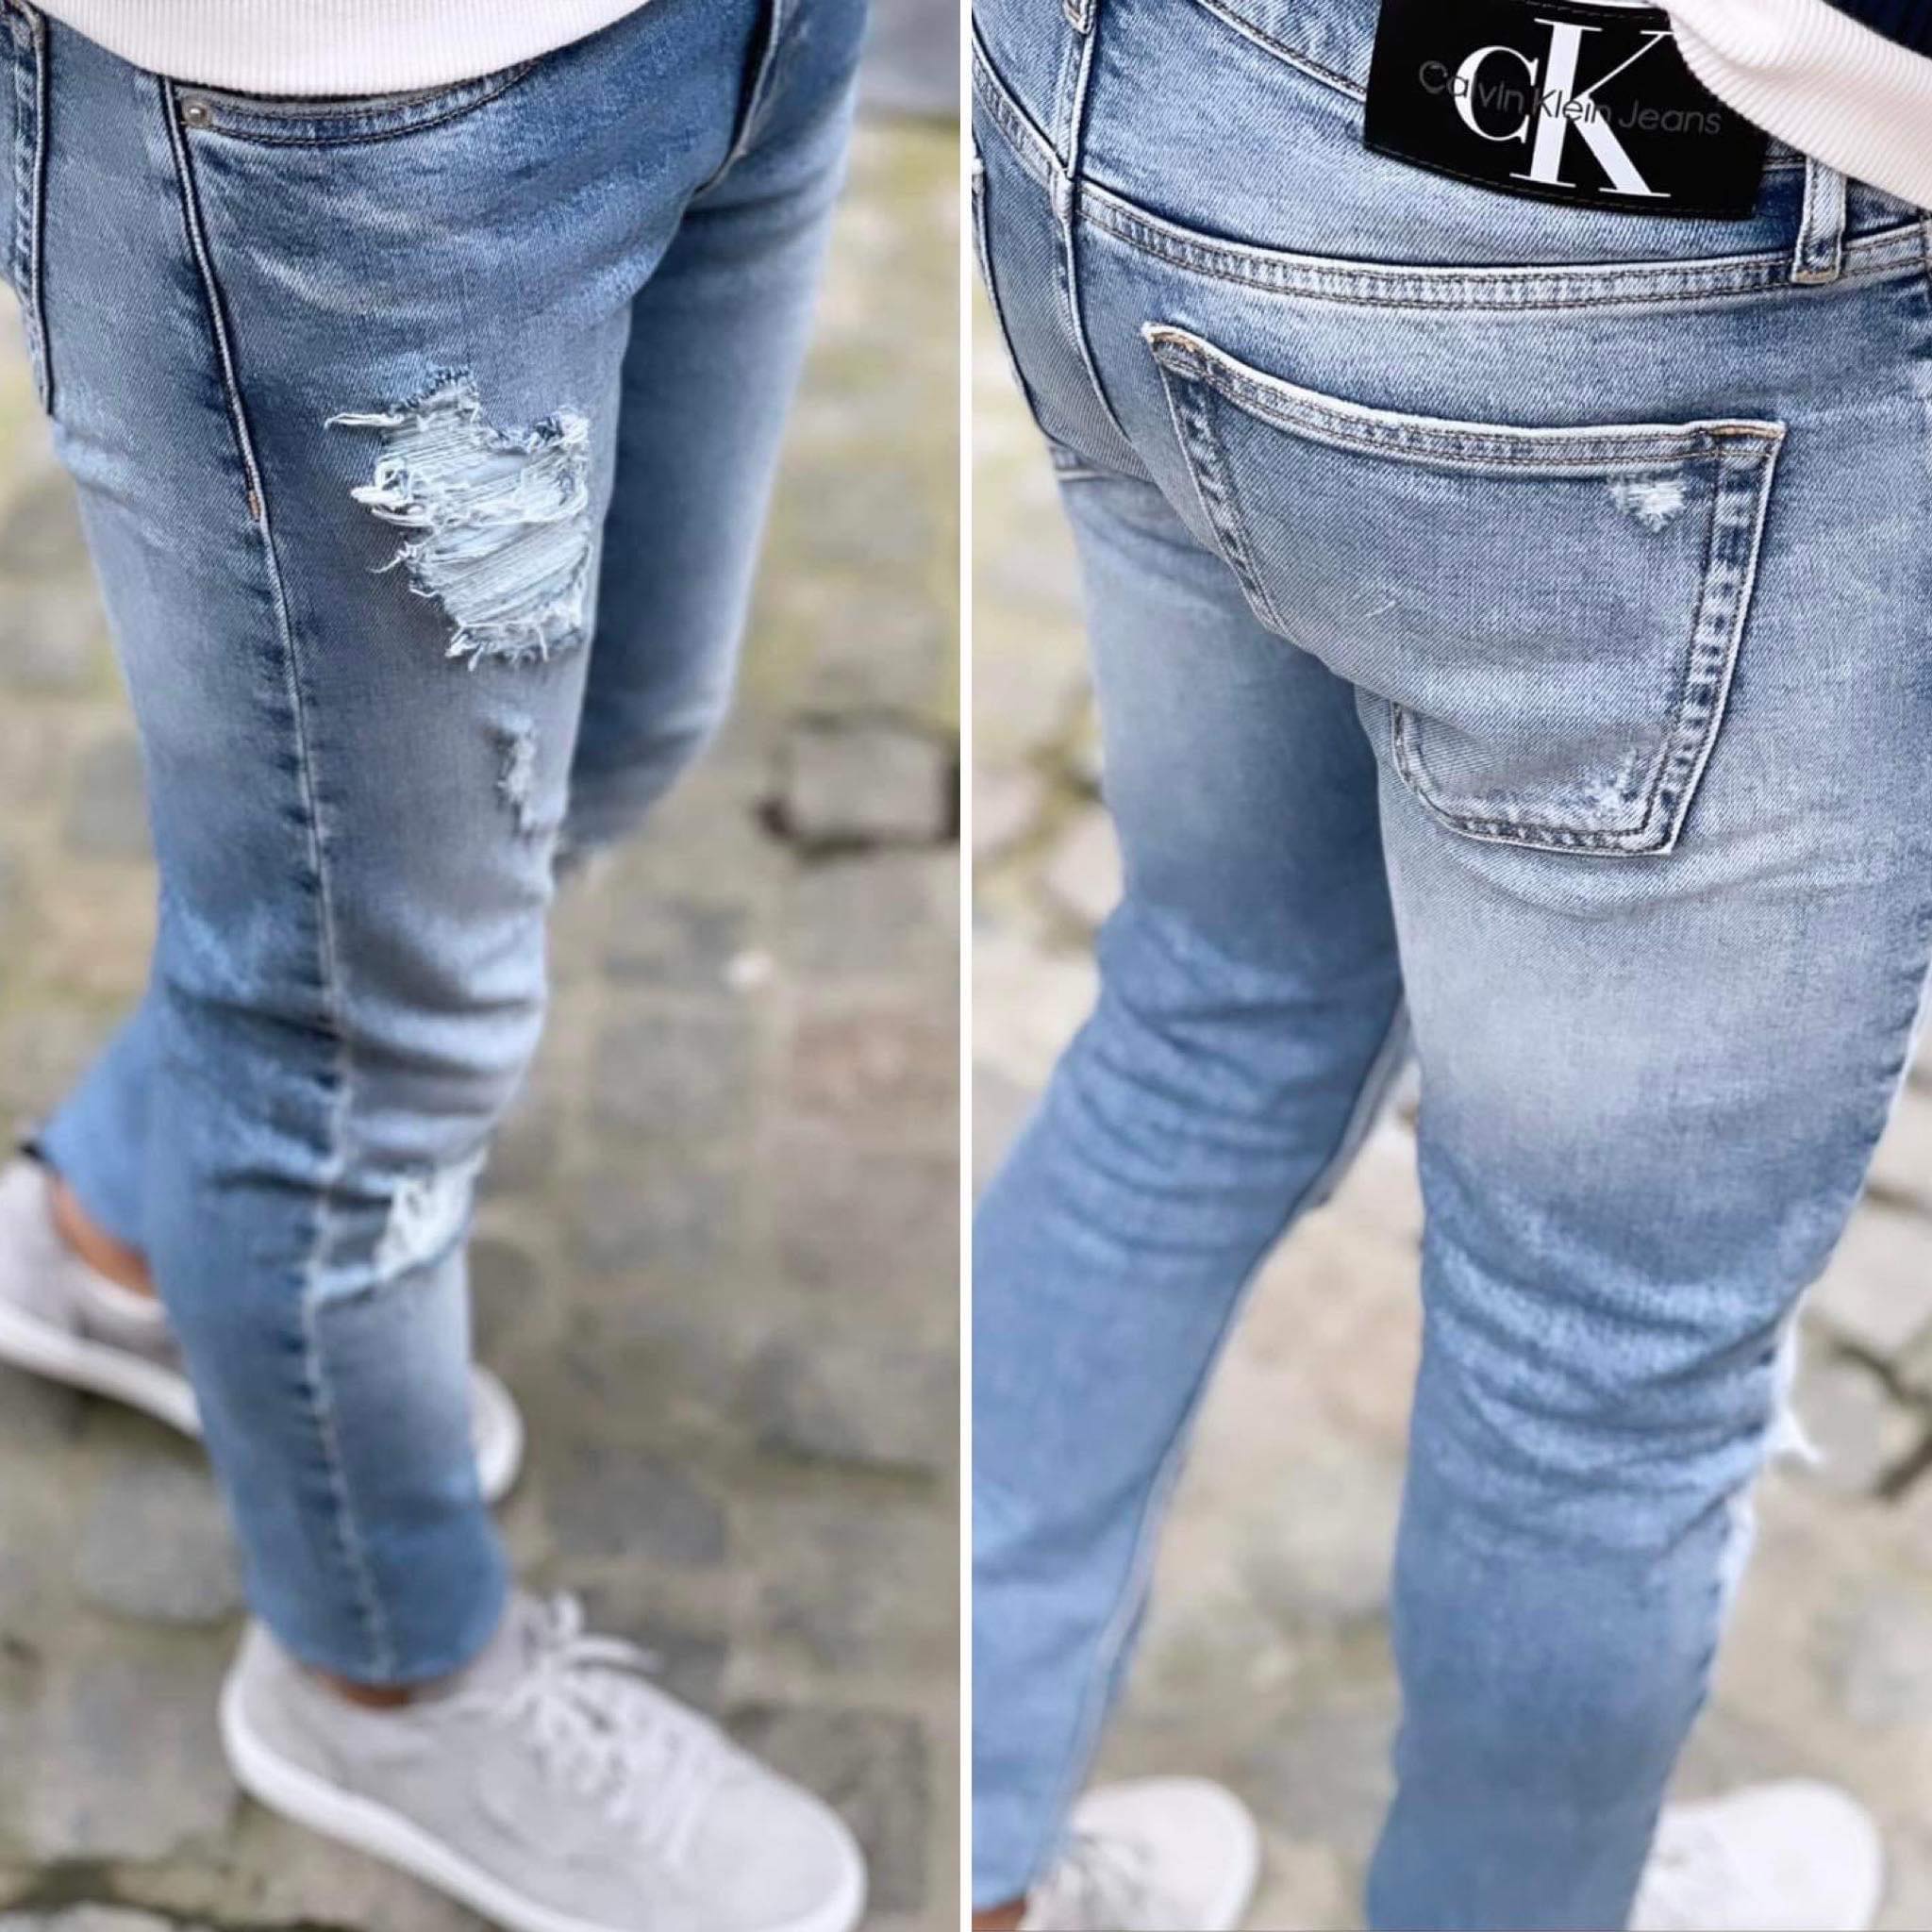 Pantalons - Jeans - Shorts